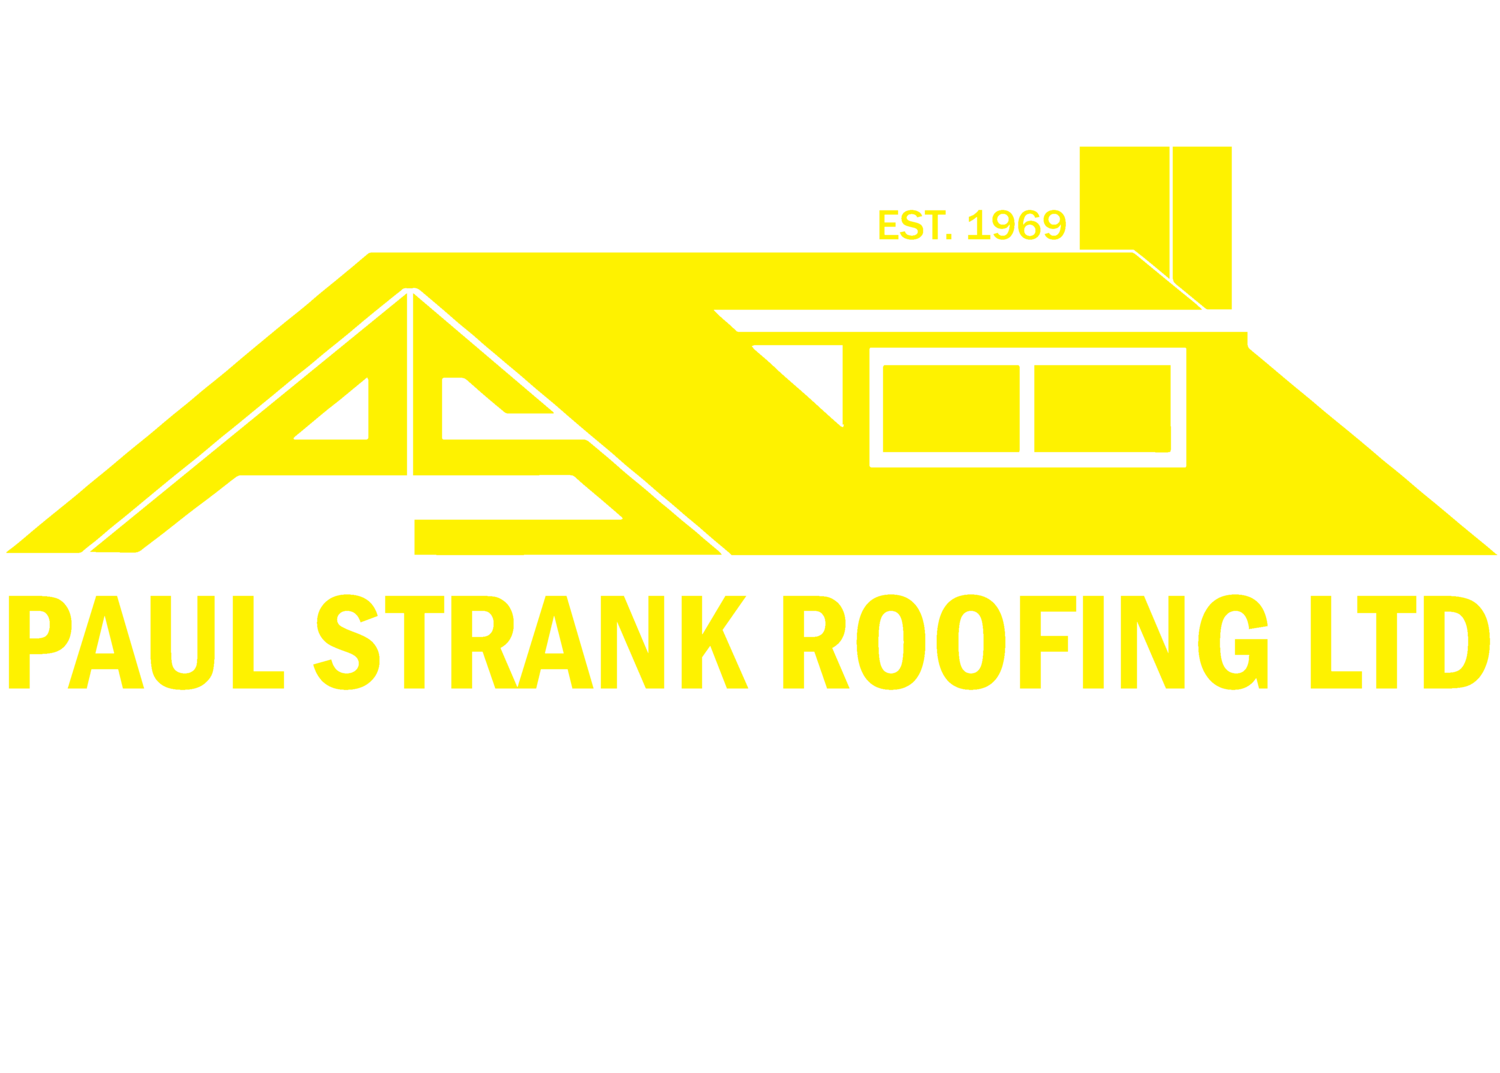 Paul Strank Roofing Ltd.